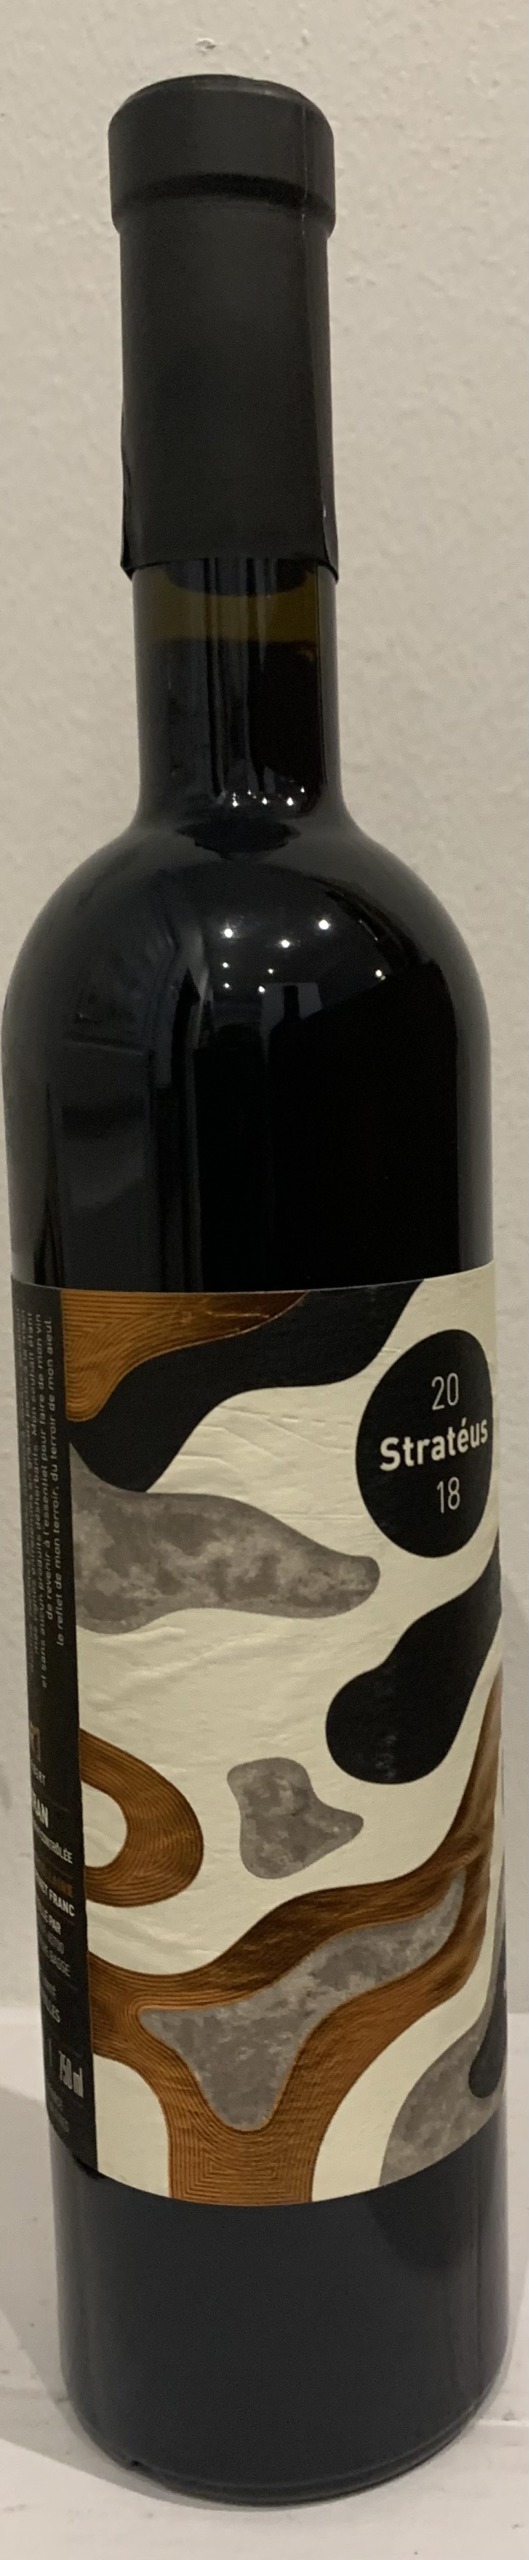 Vin rouge - Domaine Stratéus - 2018